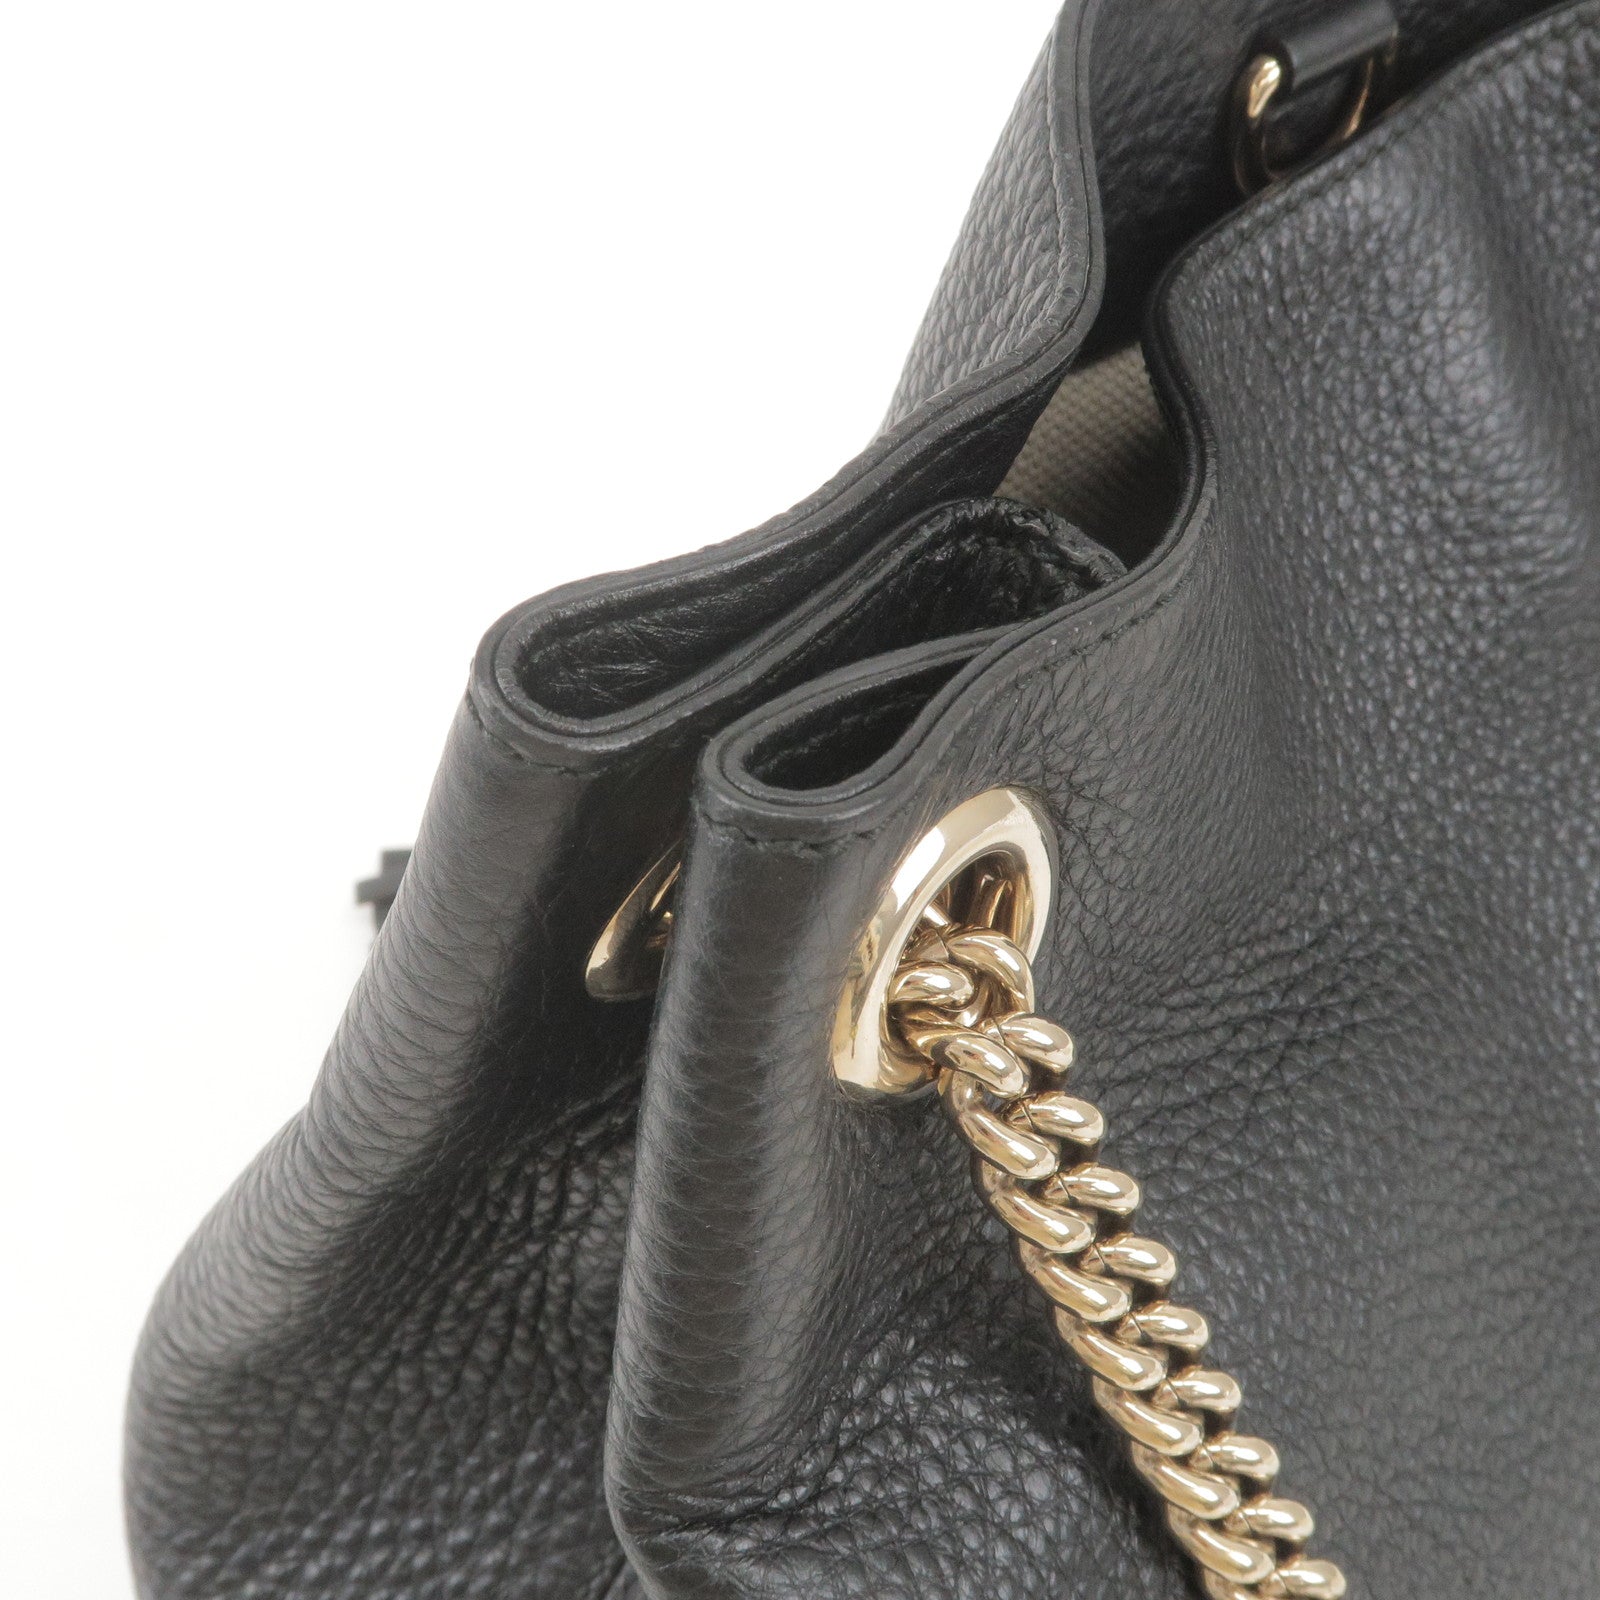  Gucci Soho Large Leather Chain Shoulder Handbag Black